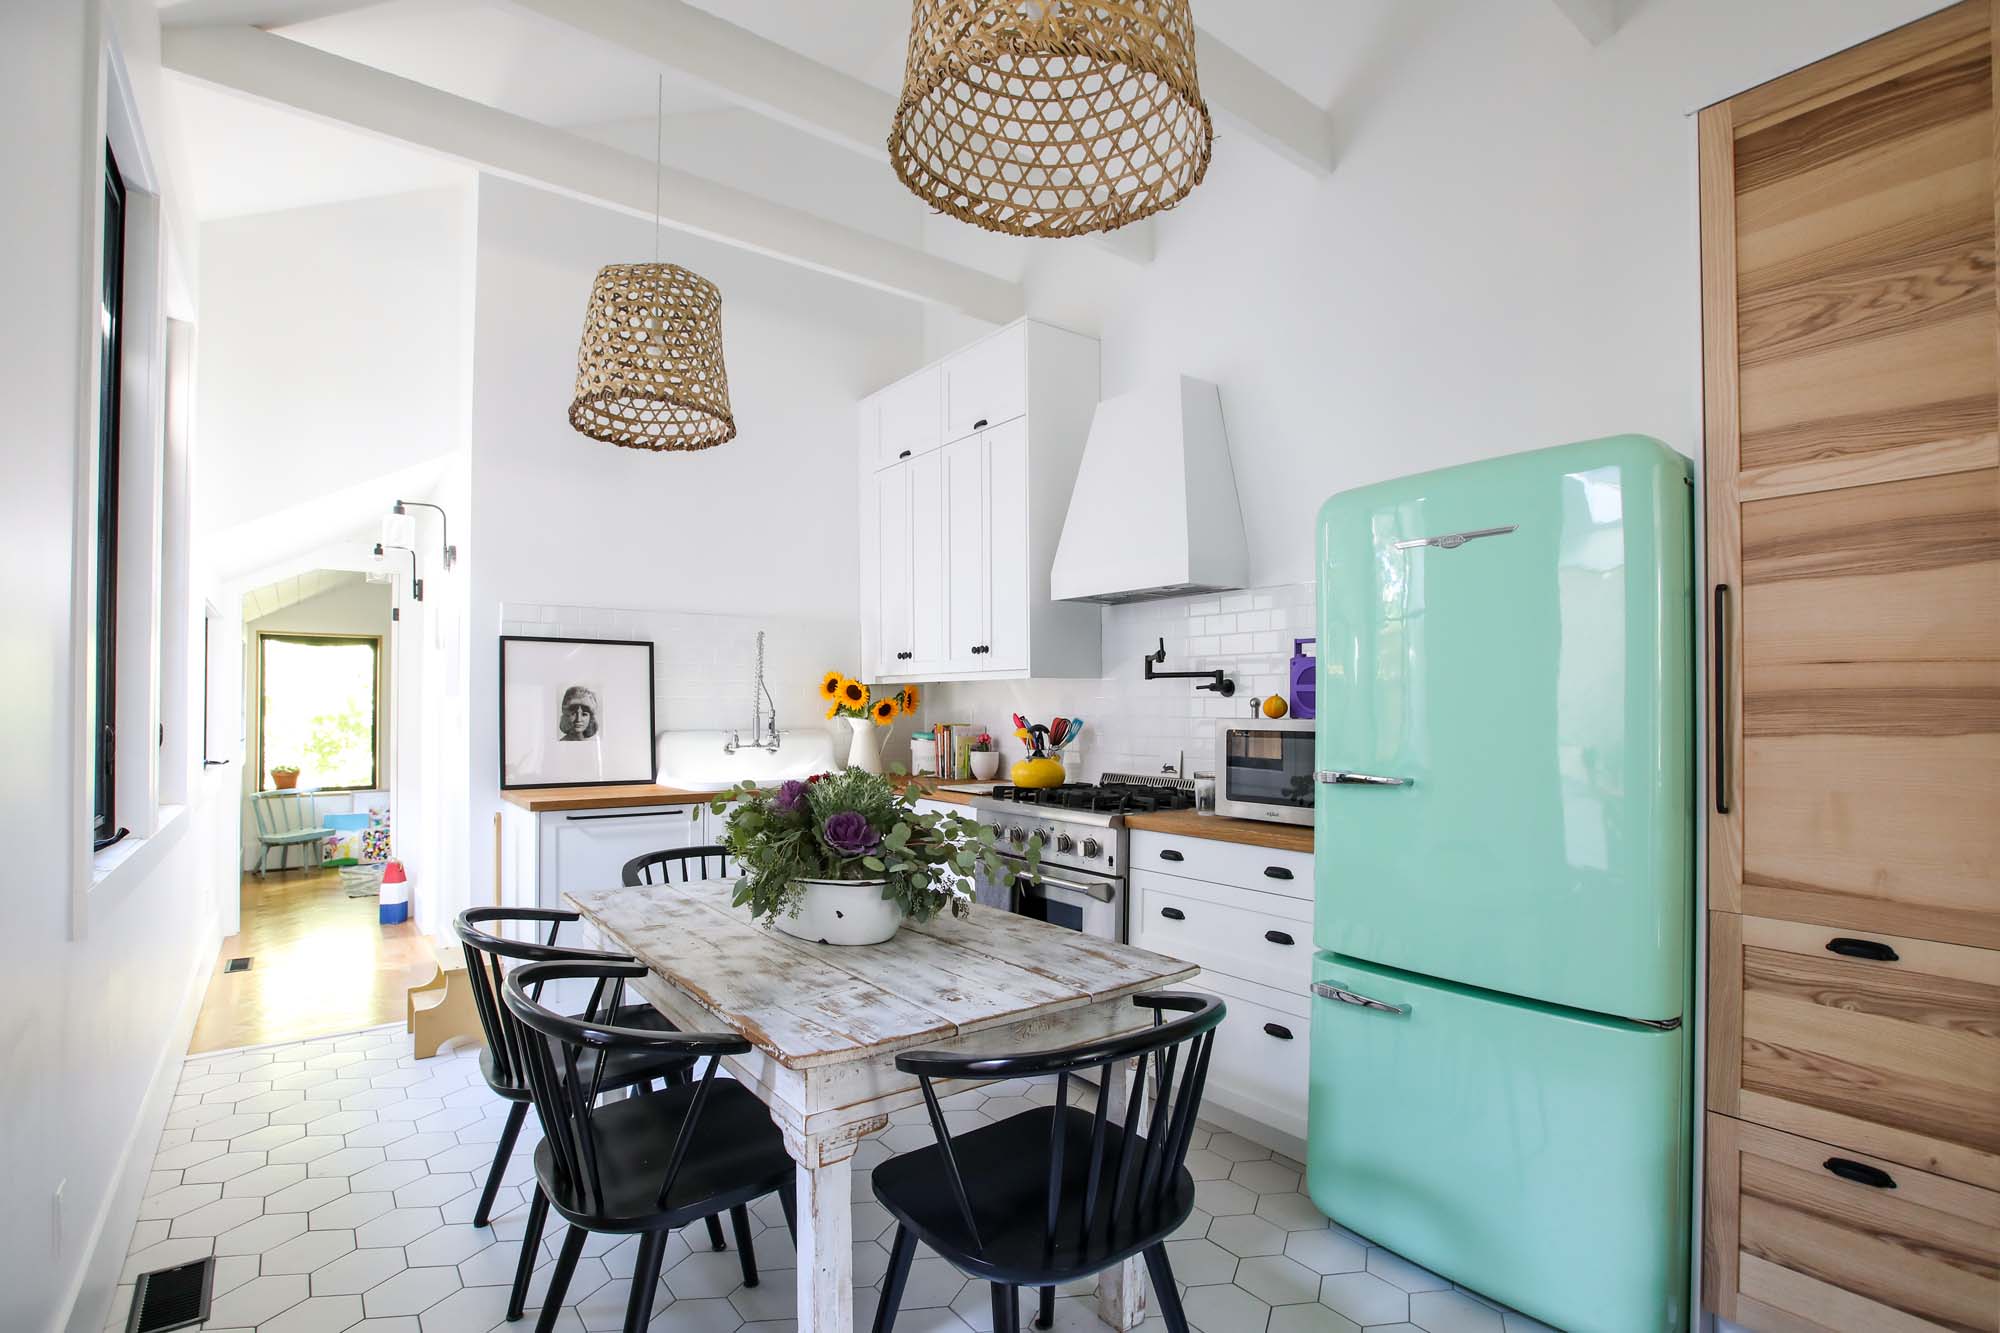 Kitchen with retro mint green fridge